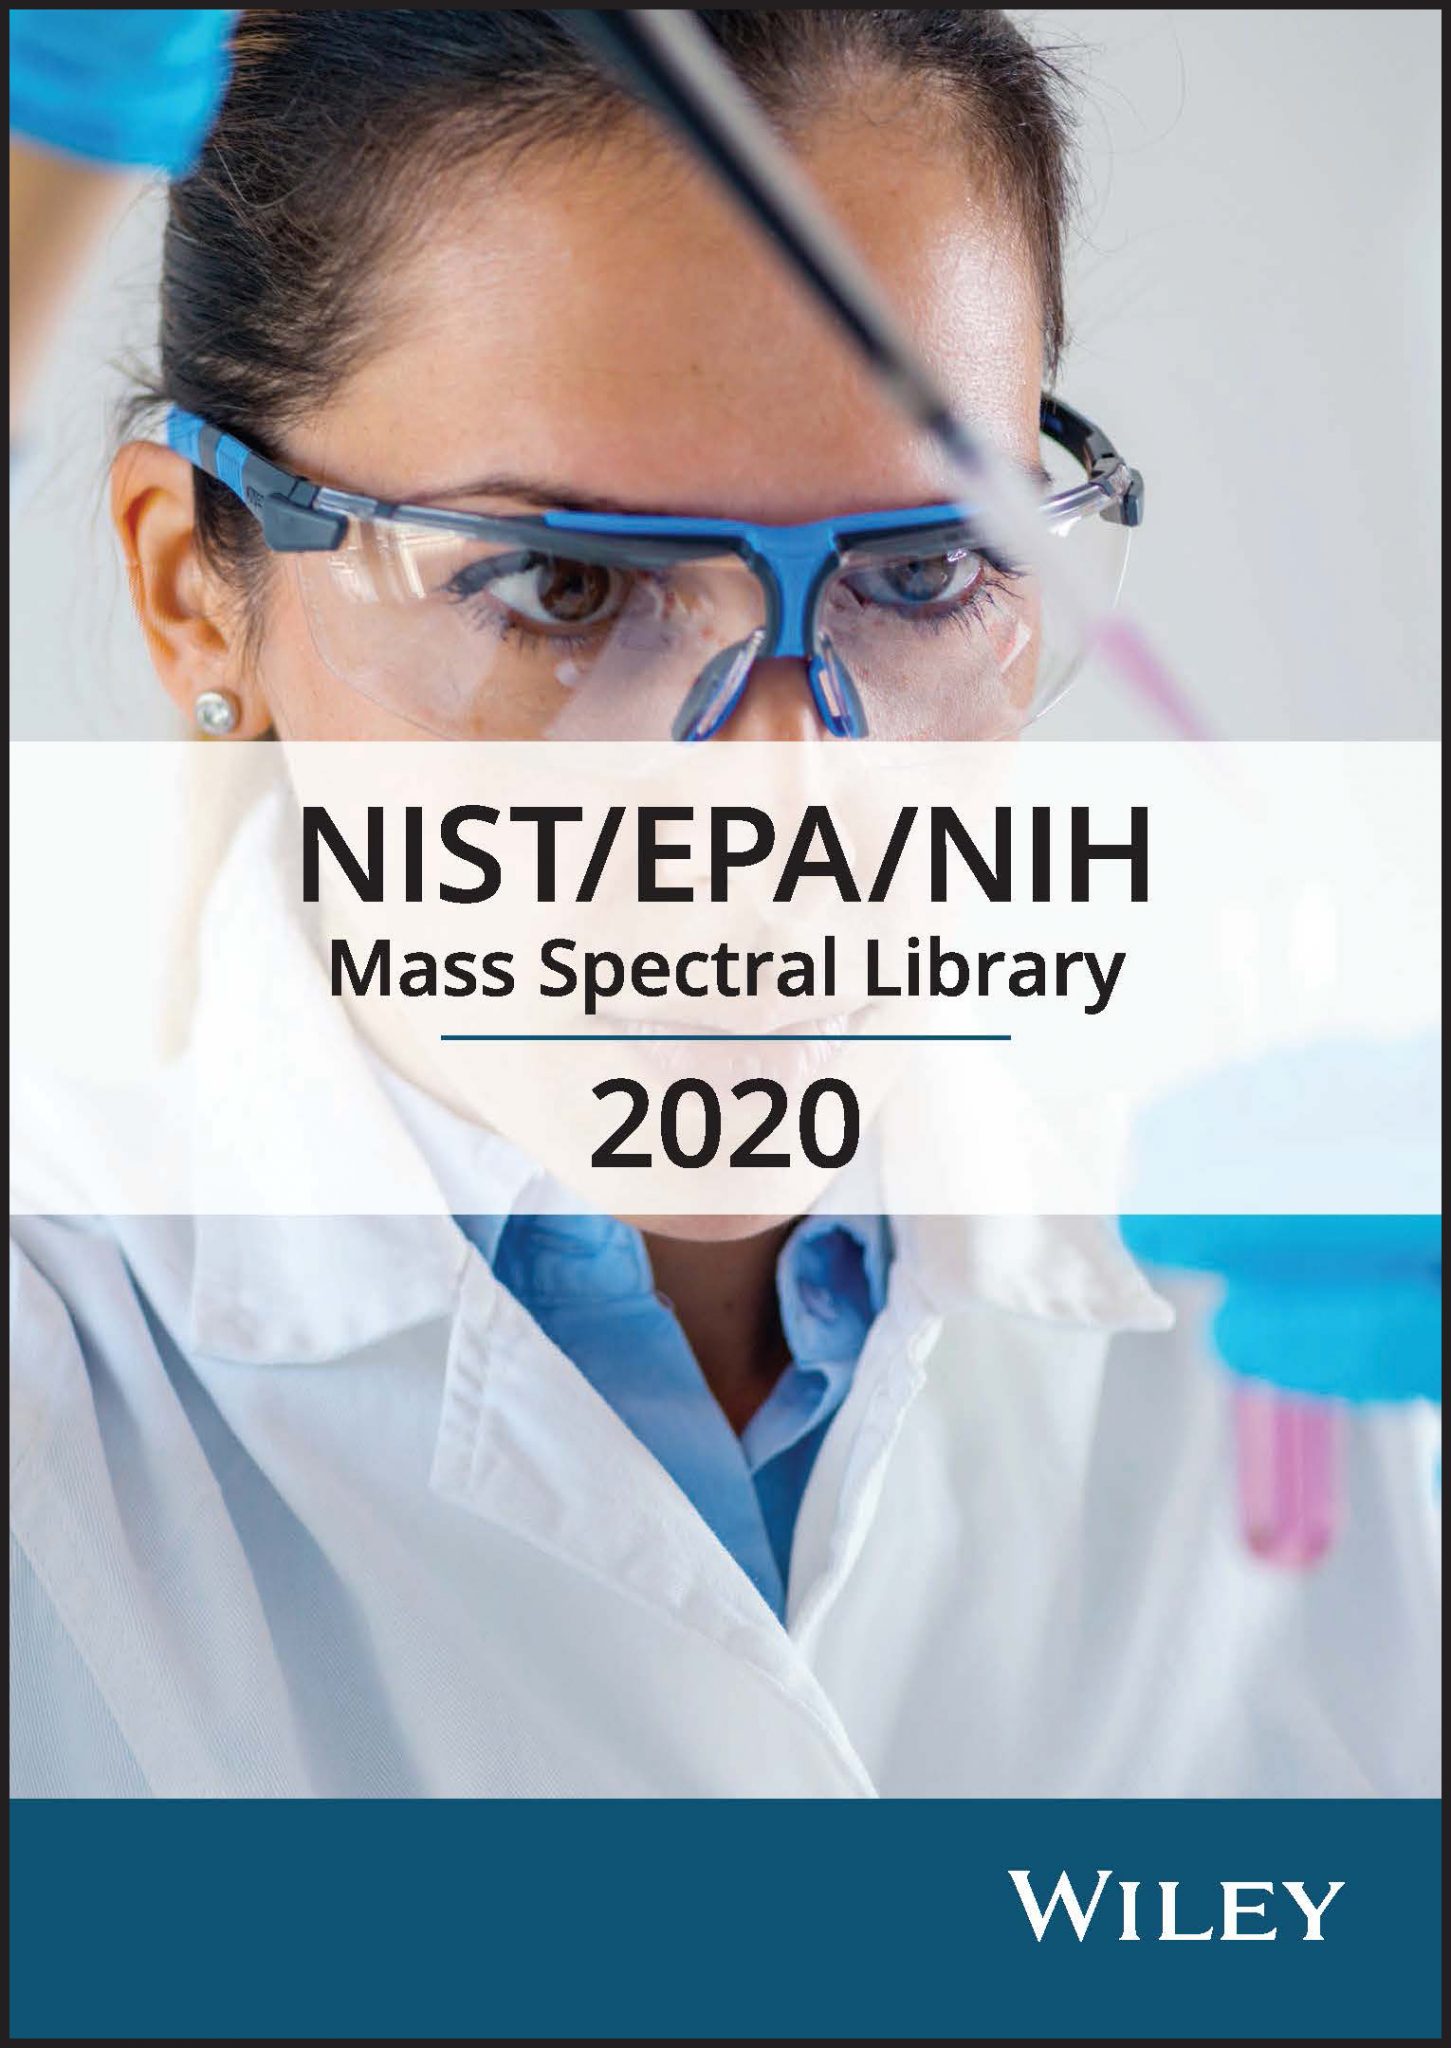 NIST20